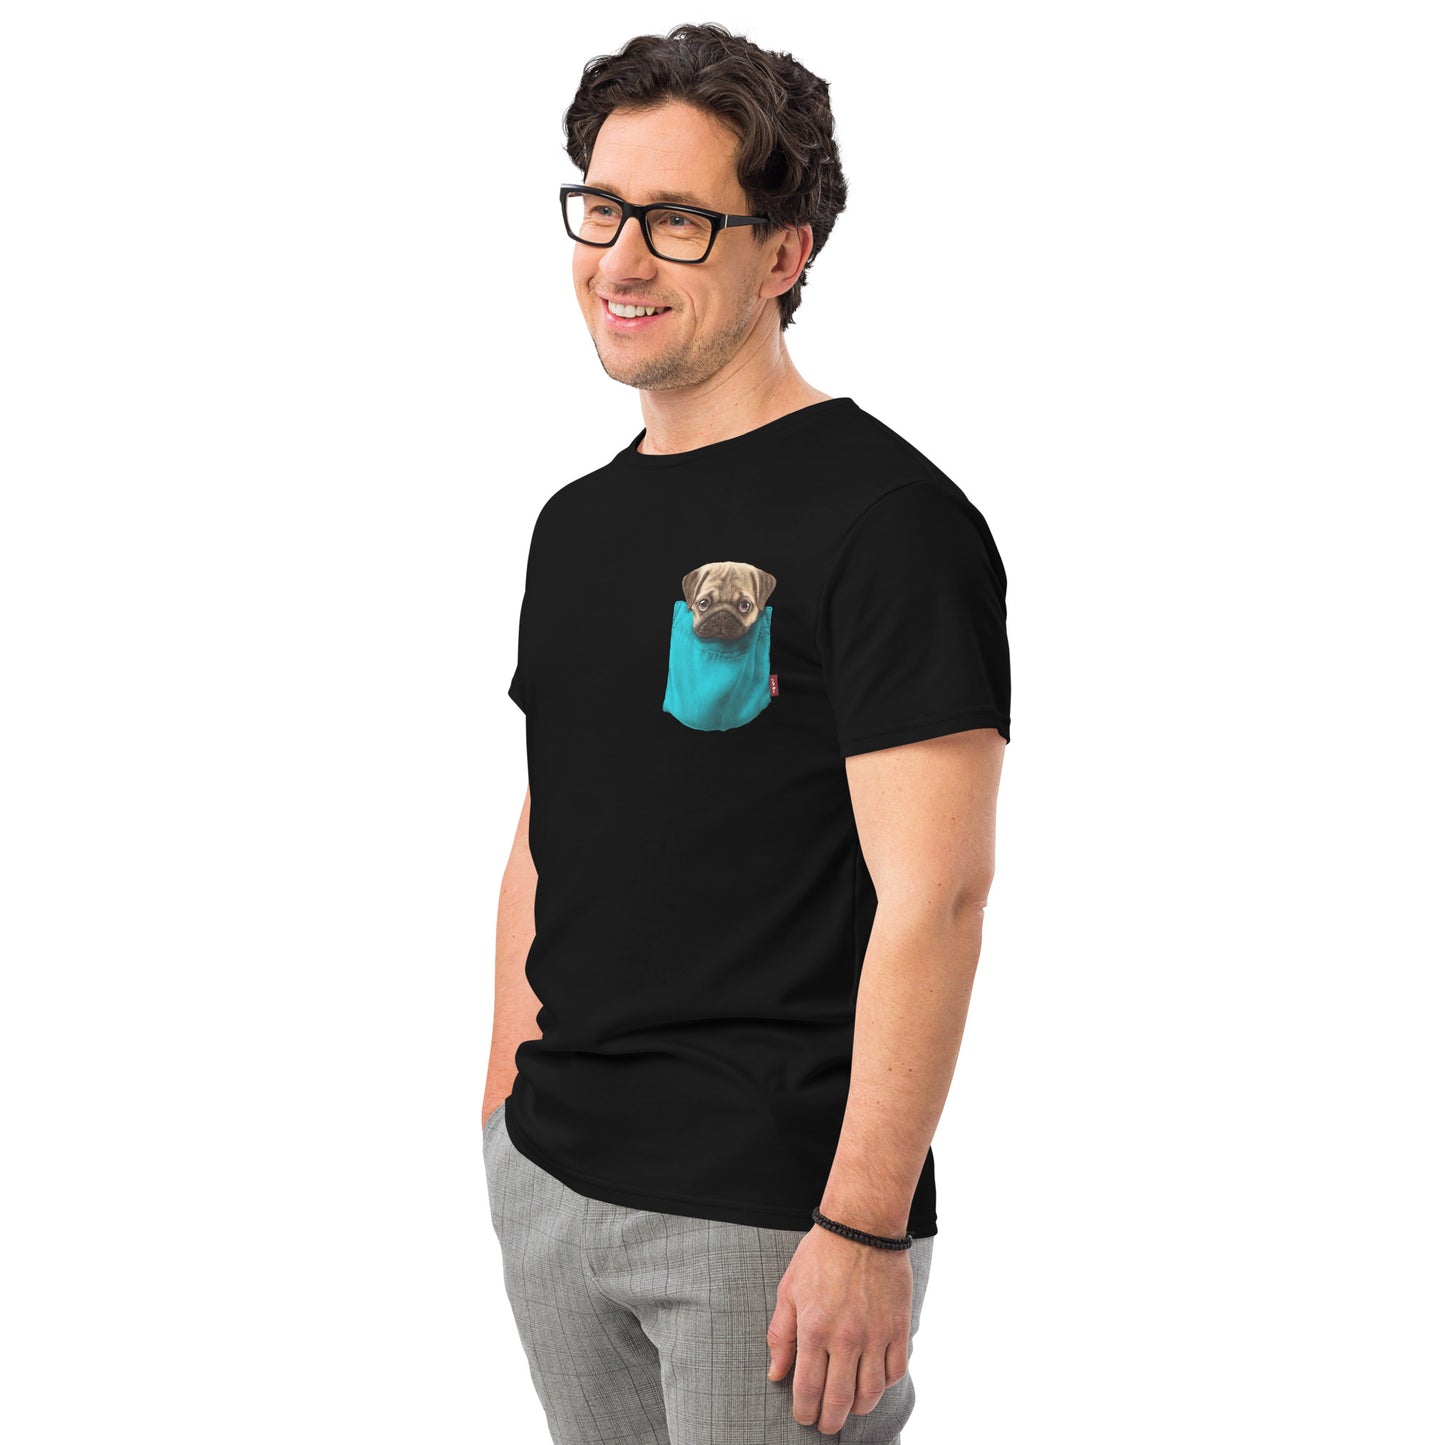 Pug Men's premium cotton t-shirt